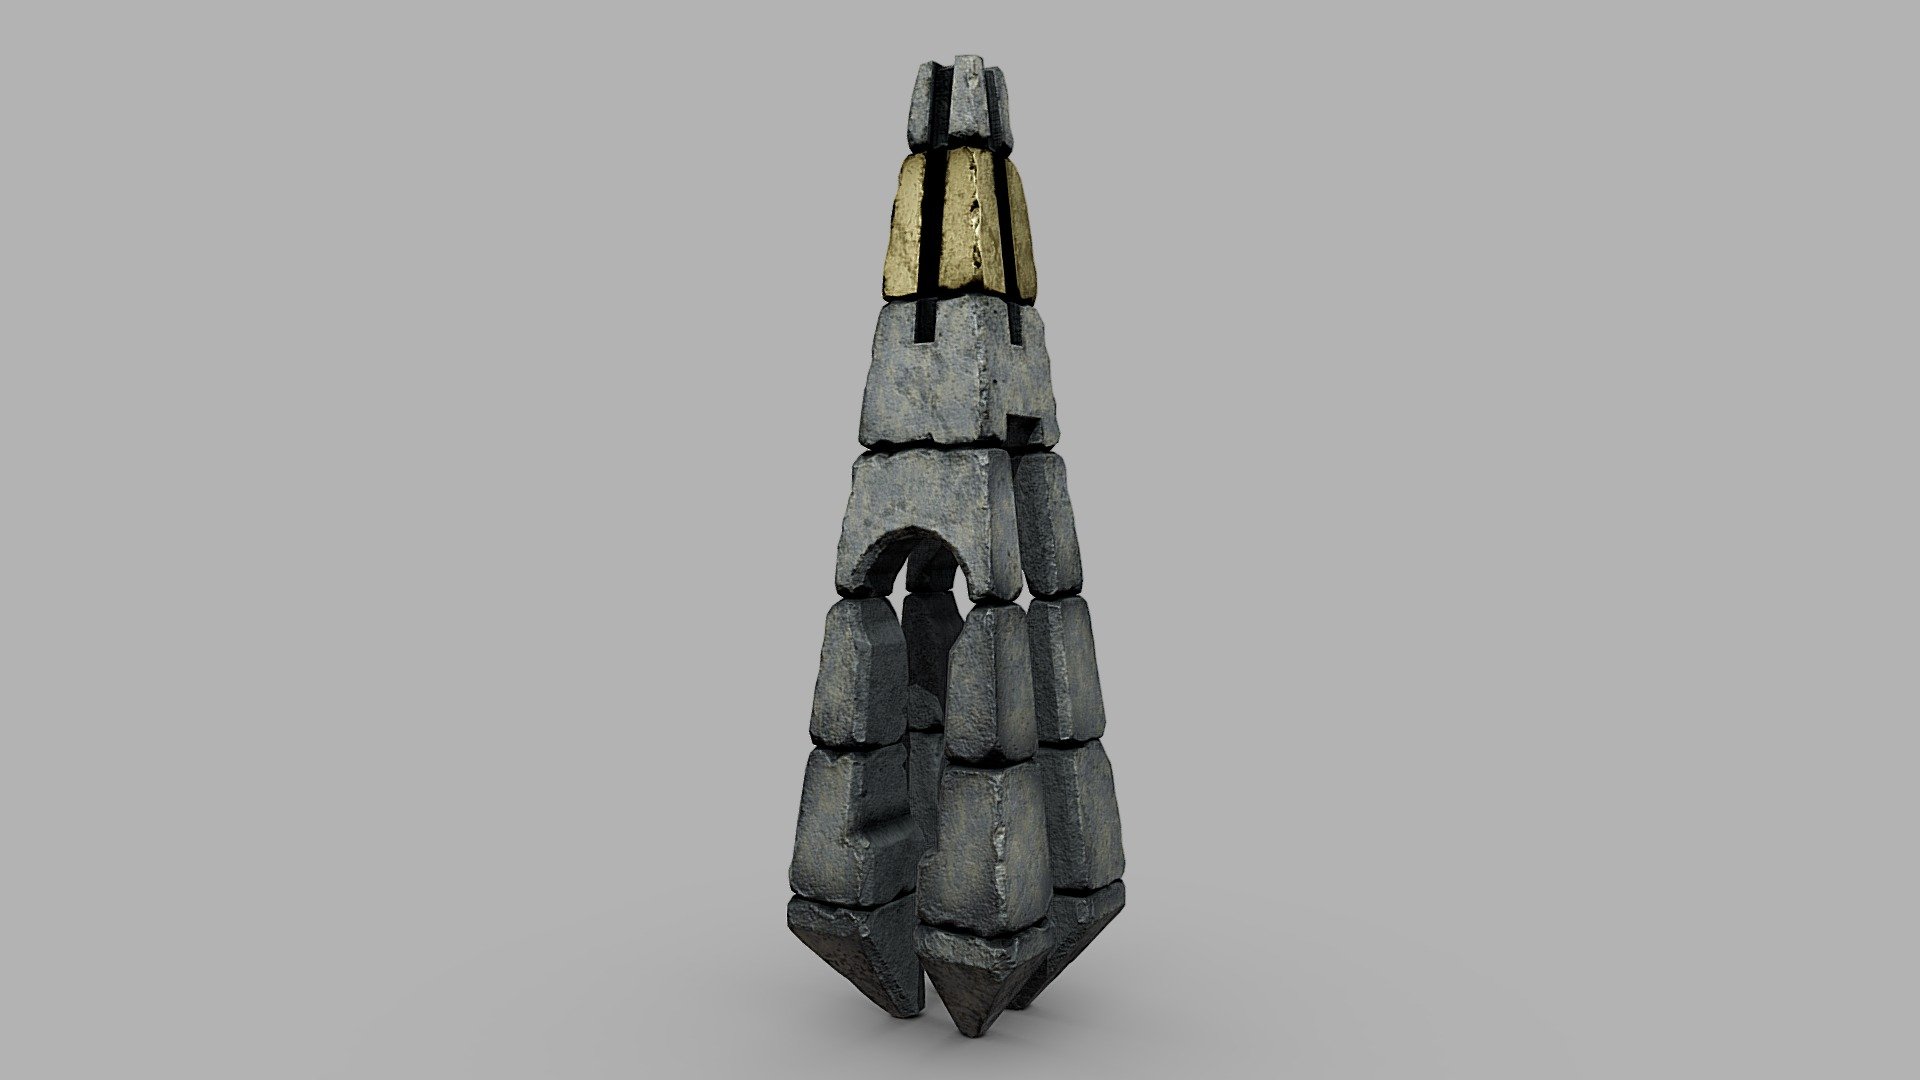 Just a simple obelisk 3d model